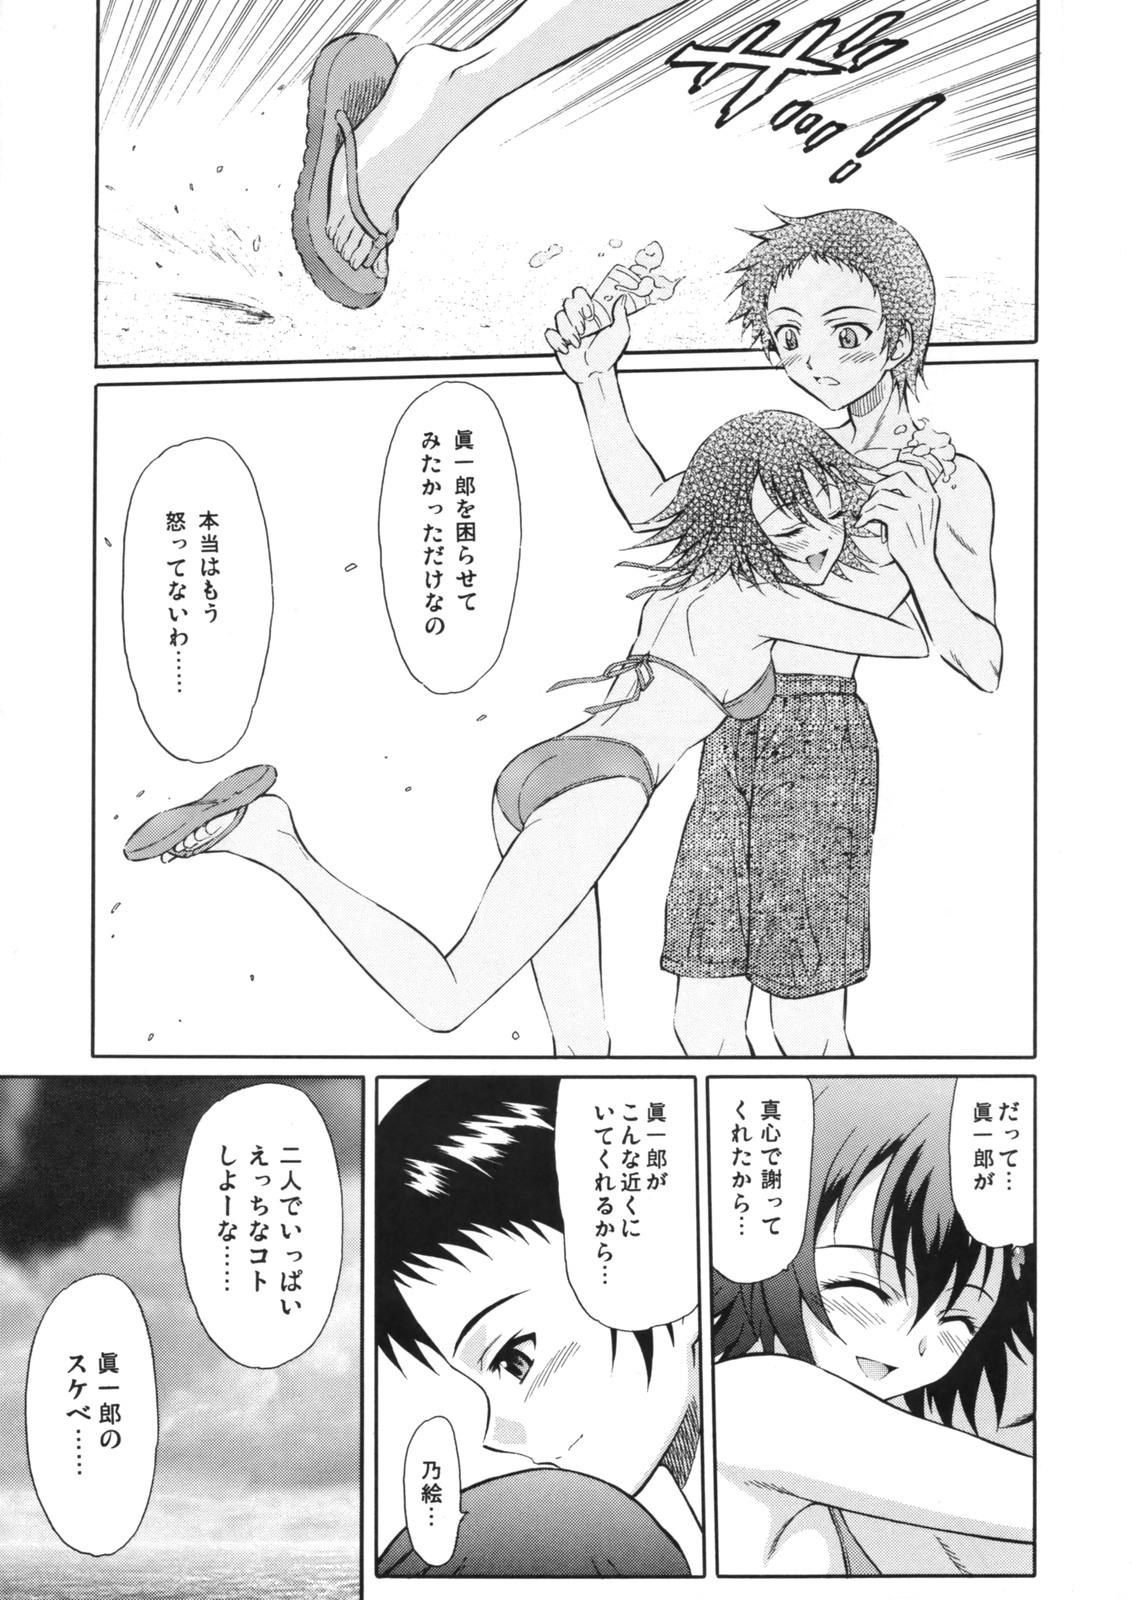 Upskirt Tenshi no Namida 2 - True tears Exhibition - Page 4